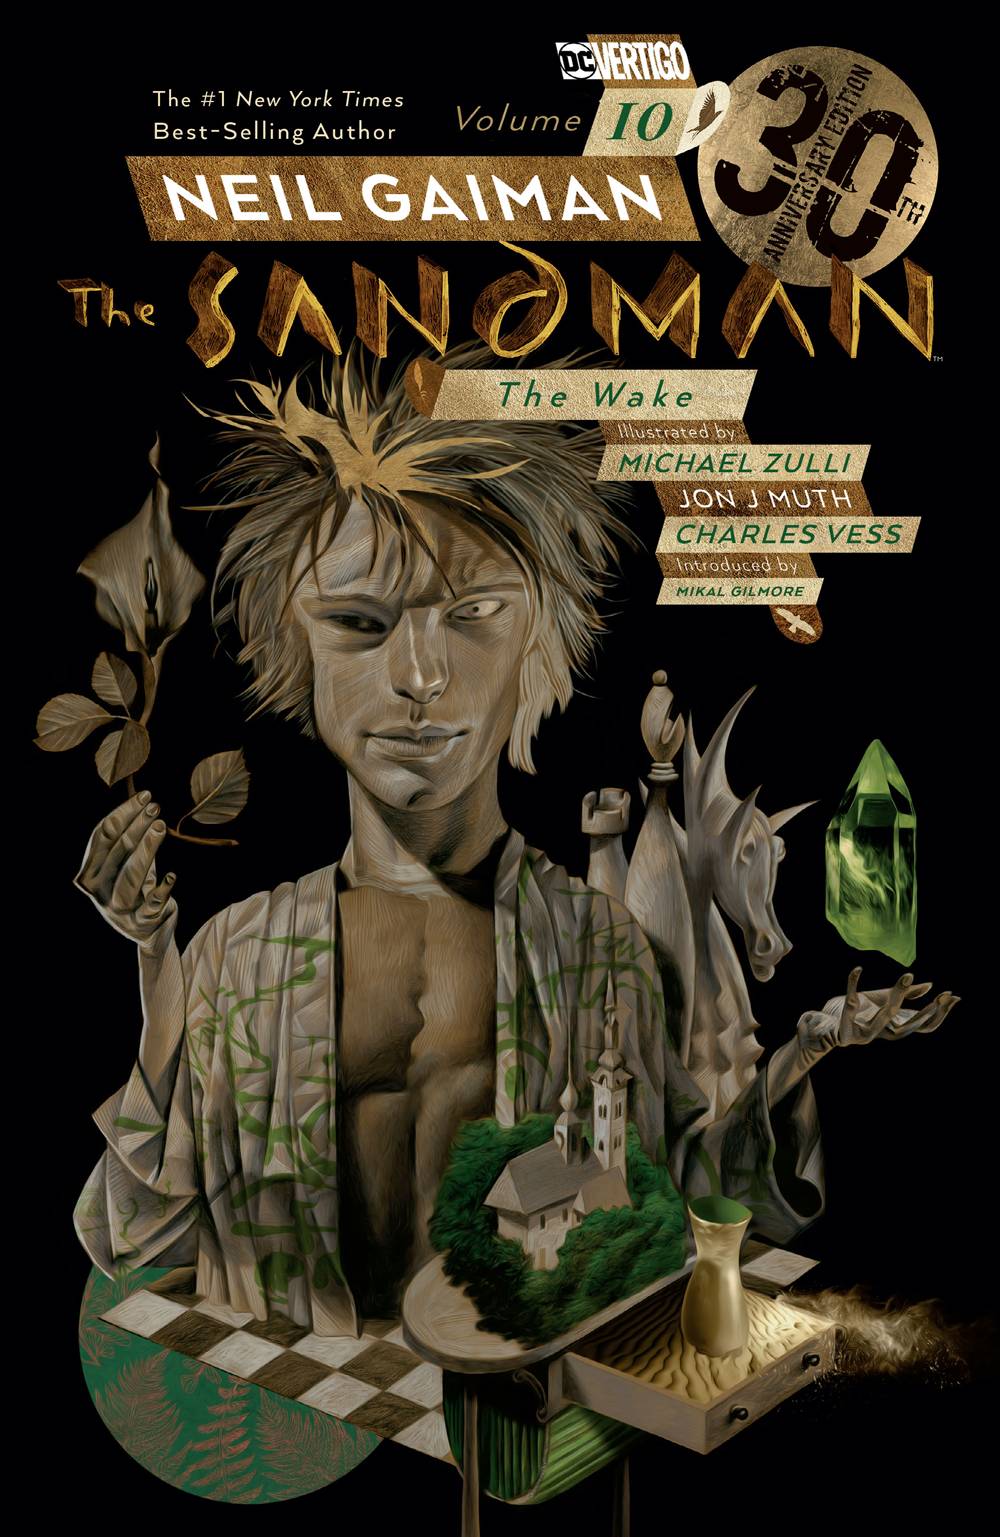 Sandman vol 10: The Wake (30th Anniversary Ed'n)